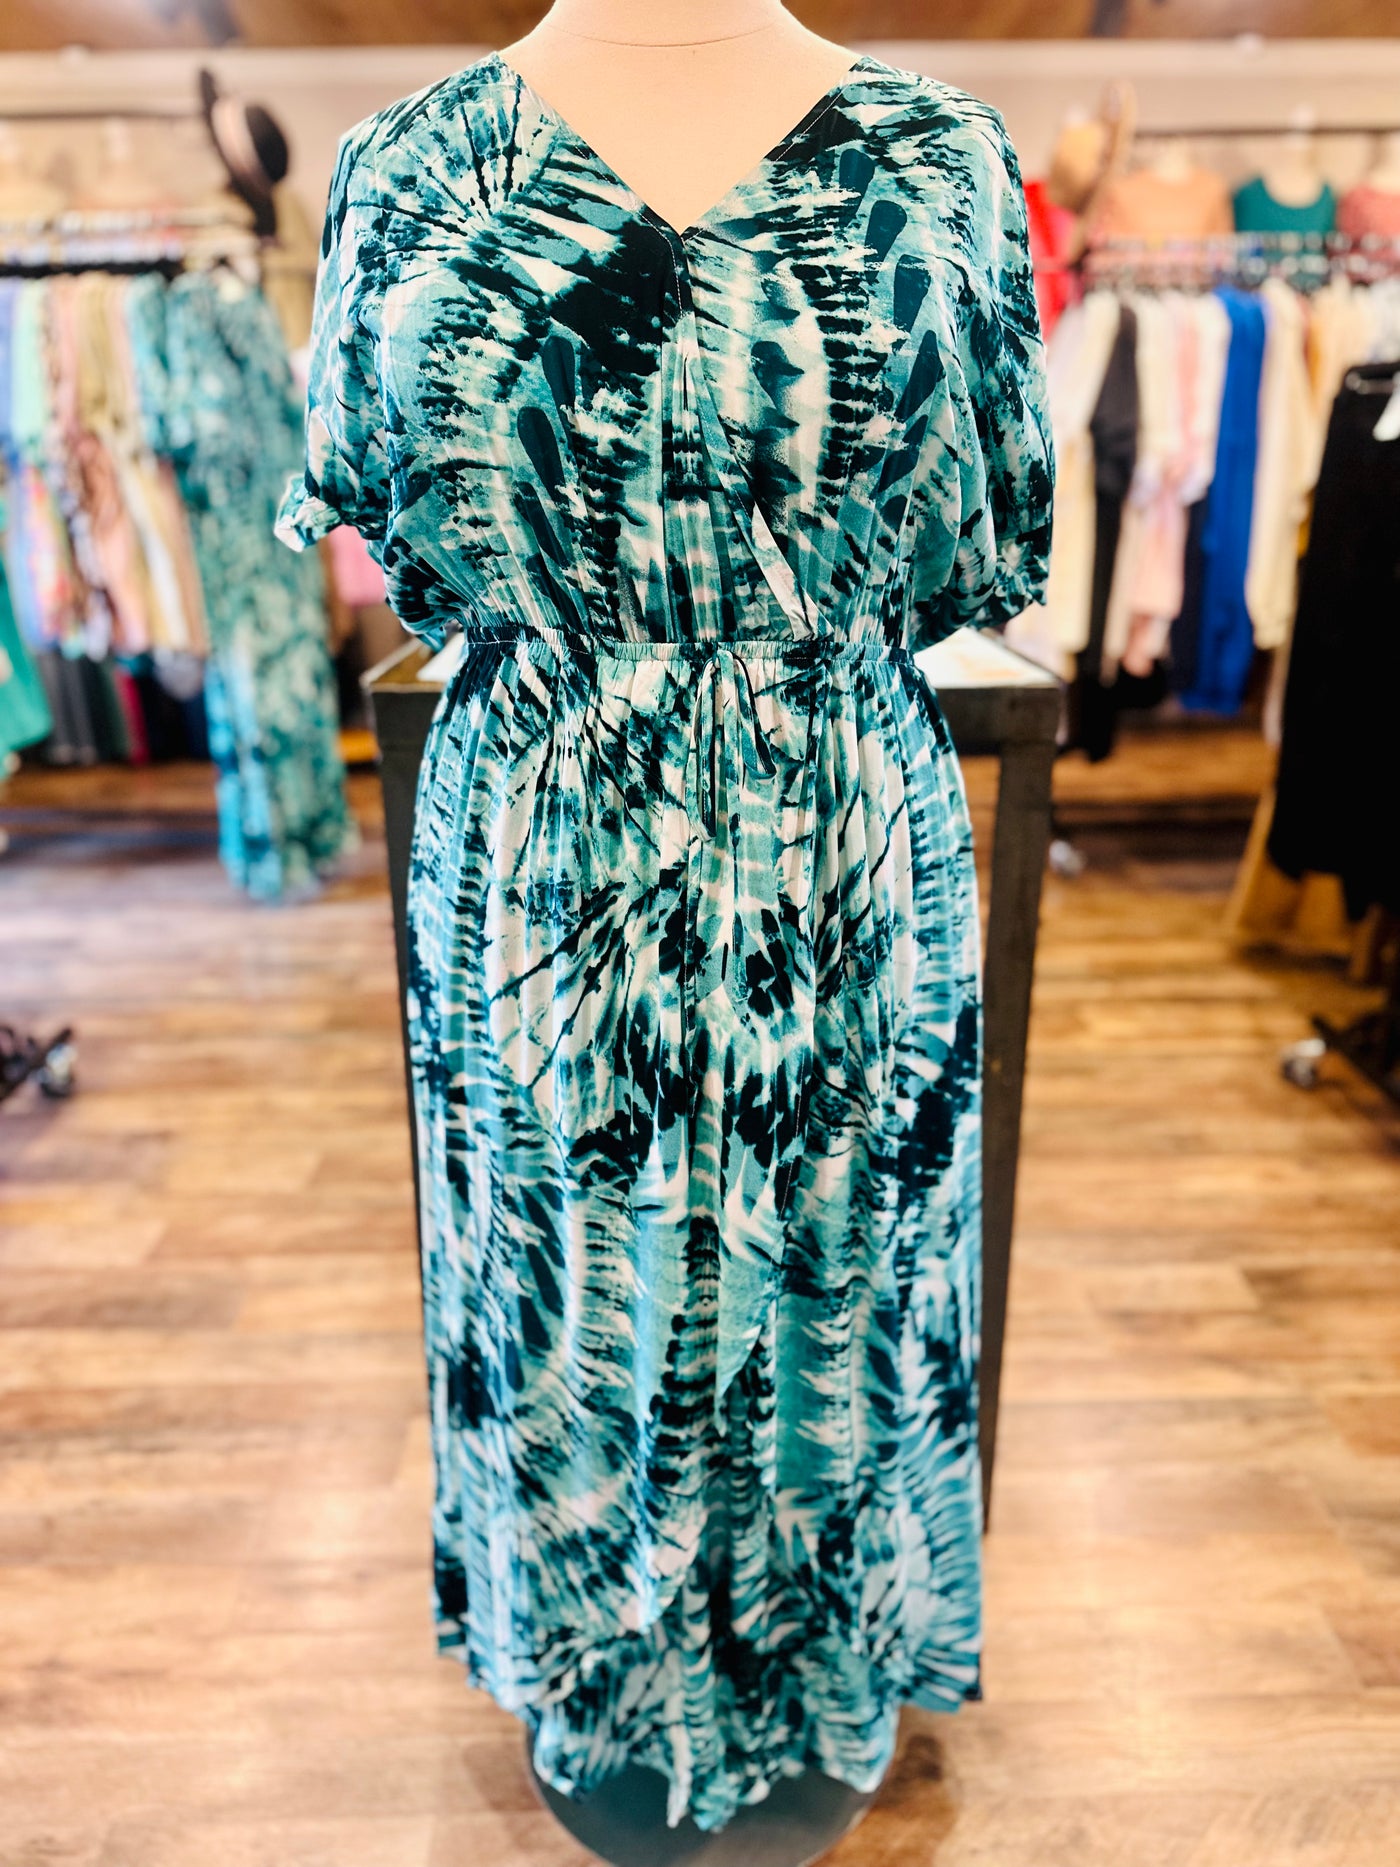 Curvy Jade Tie Dye Surplice Slit Maxi Dress with Elastic Waist